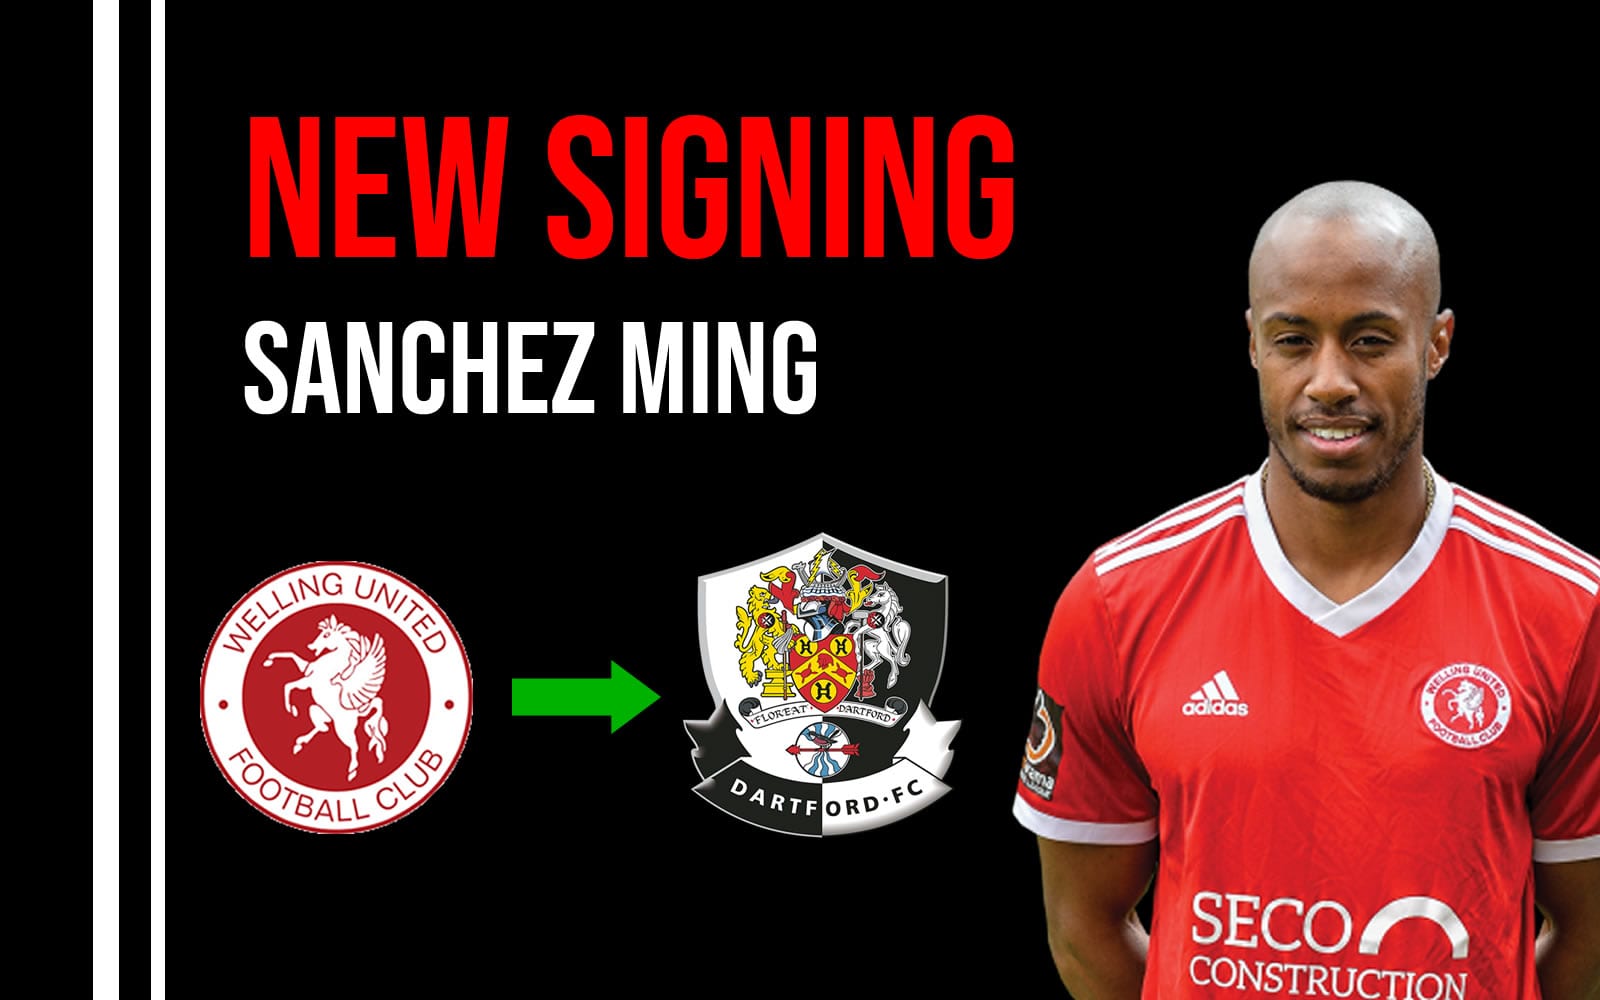 New Signing Sanchez Ming